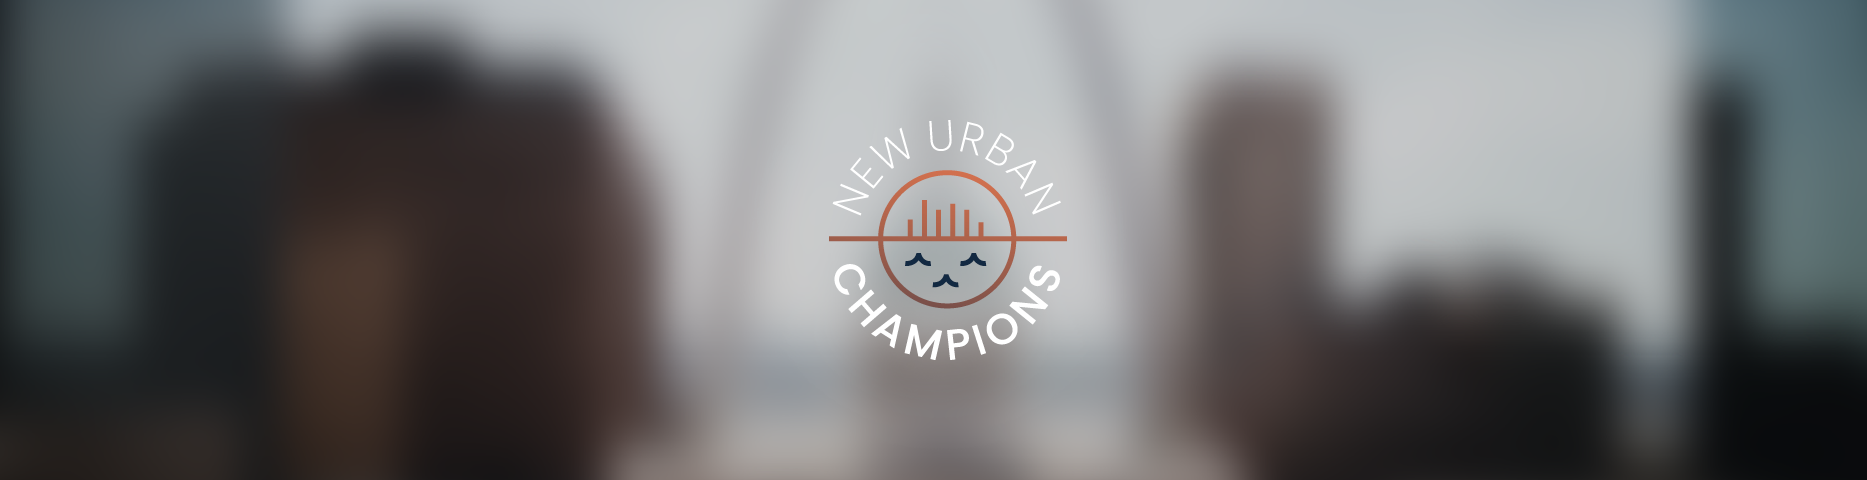 New Urban Champions